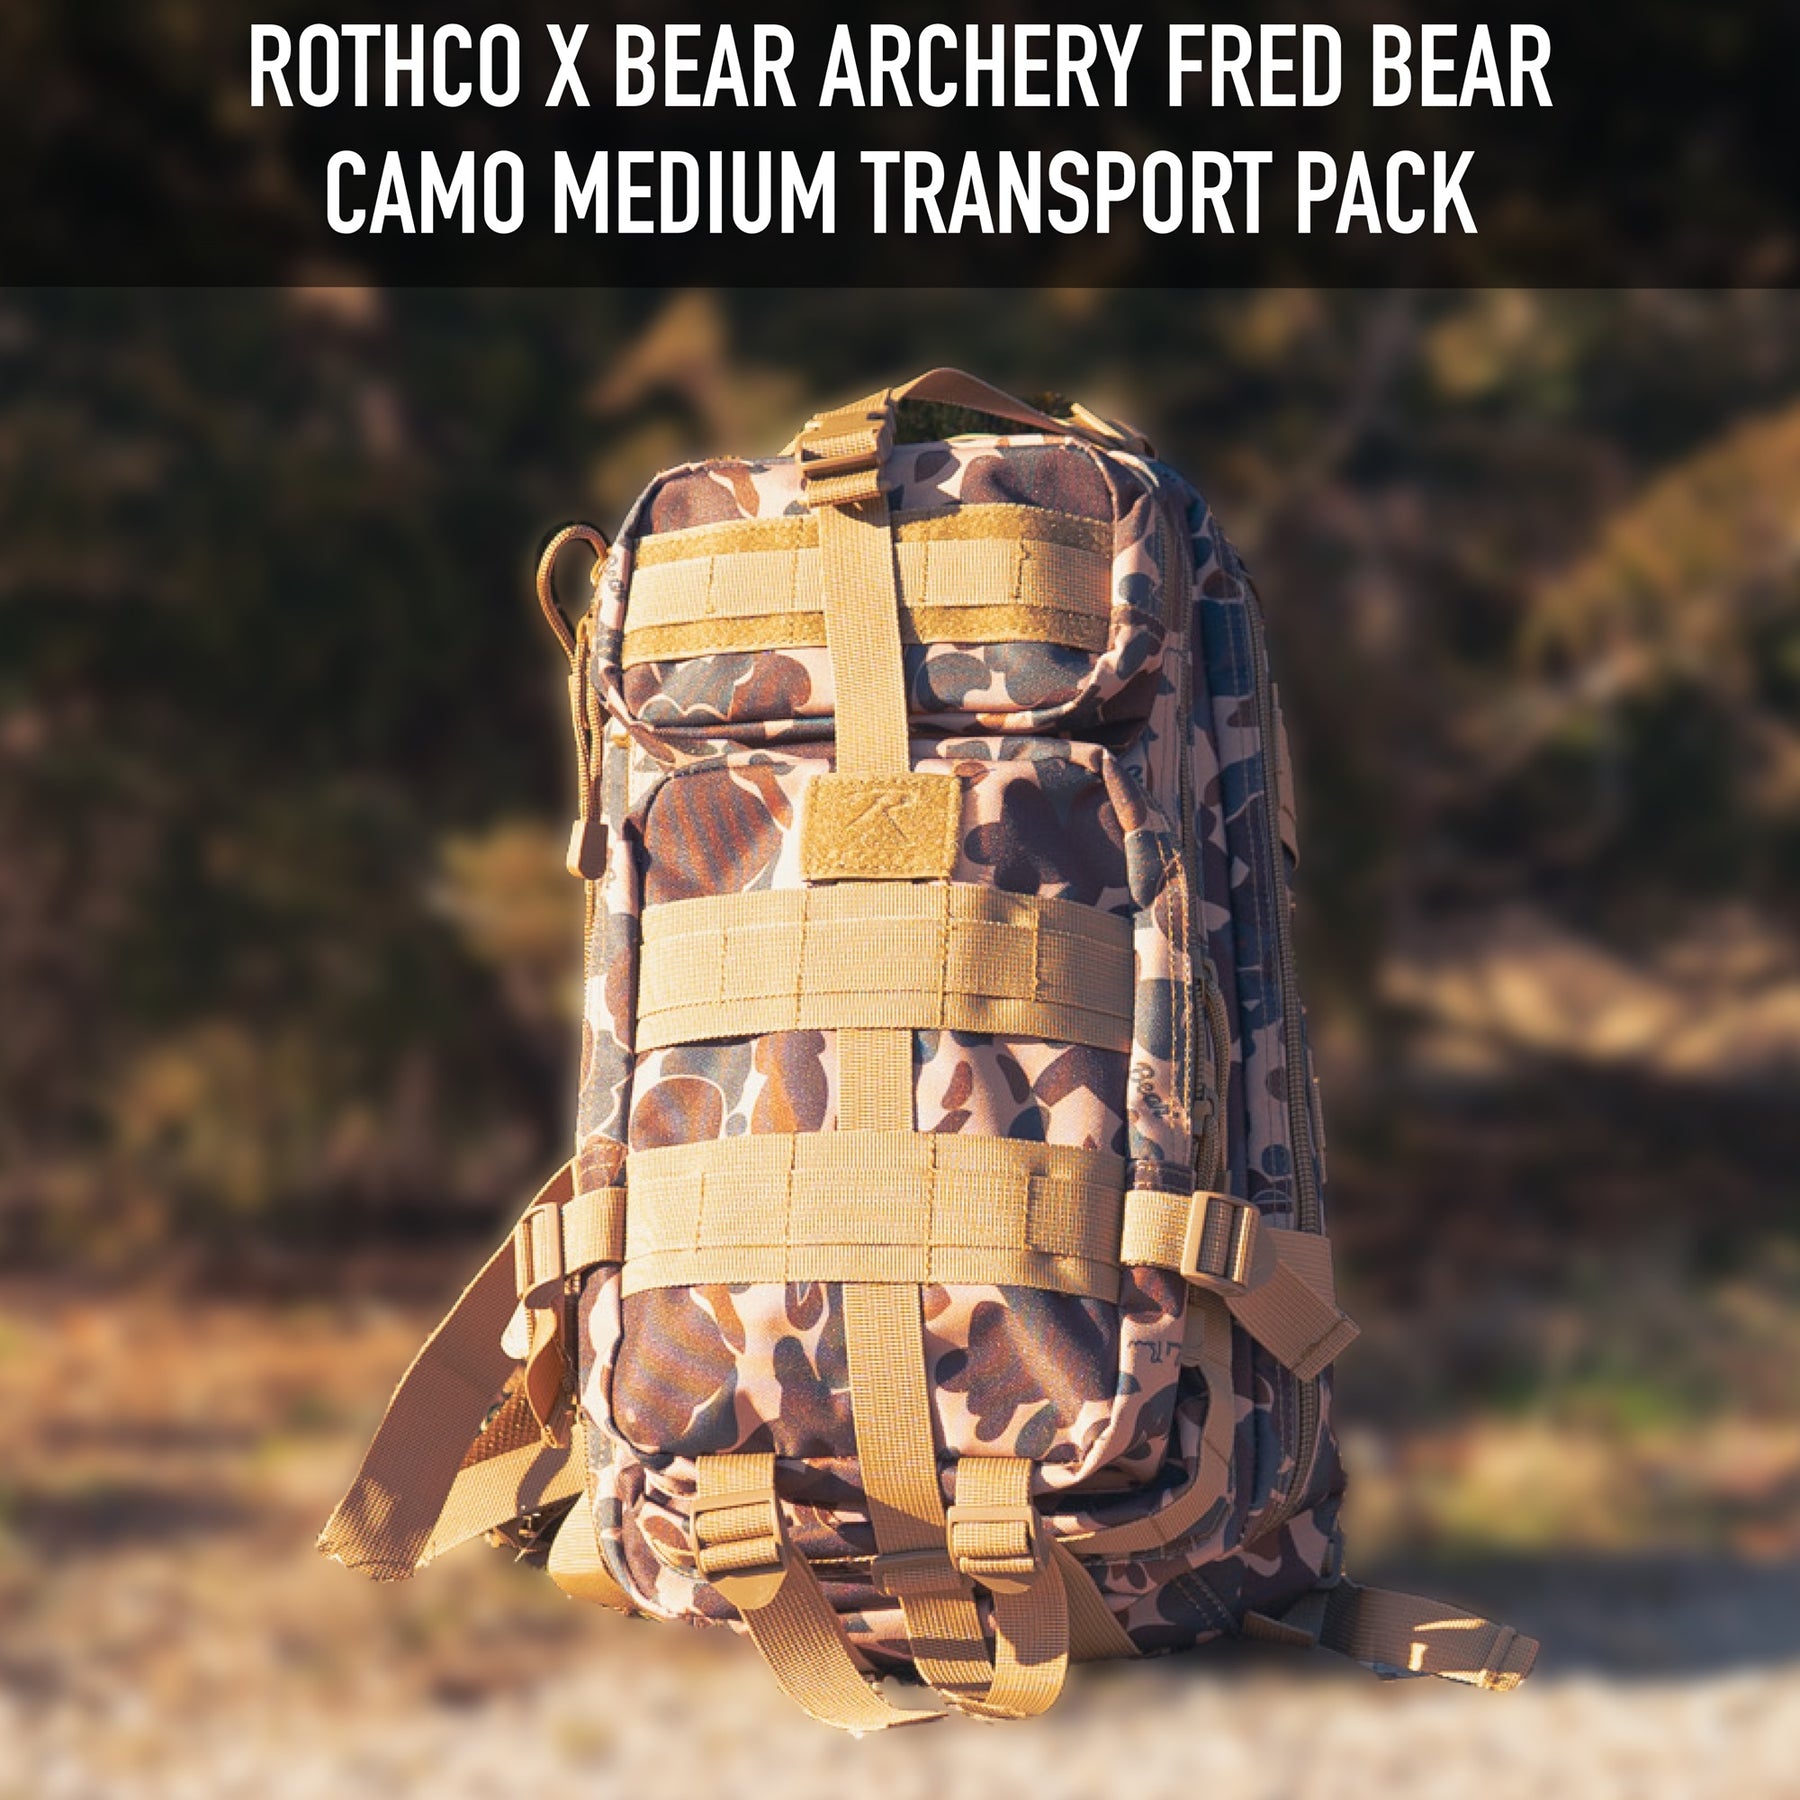 Rothco X Bear Archery Fred Bear Camo Transport Pack - Medium